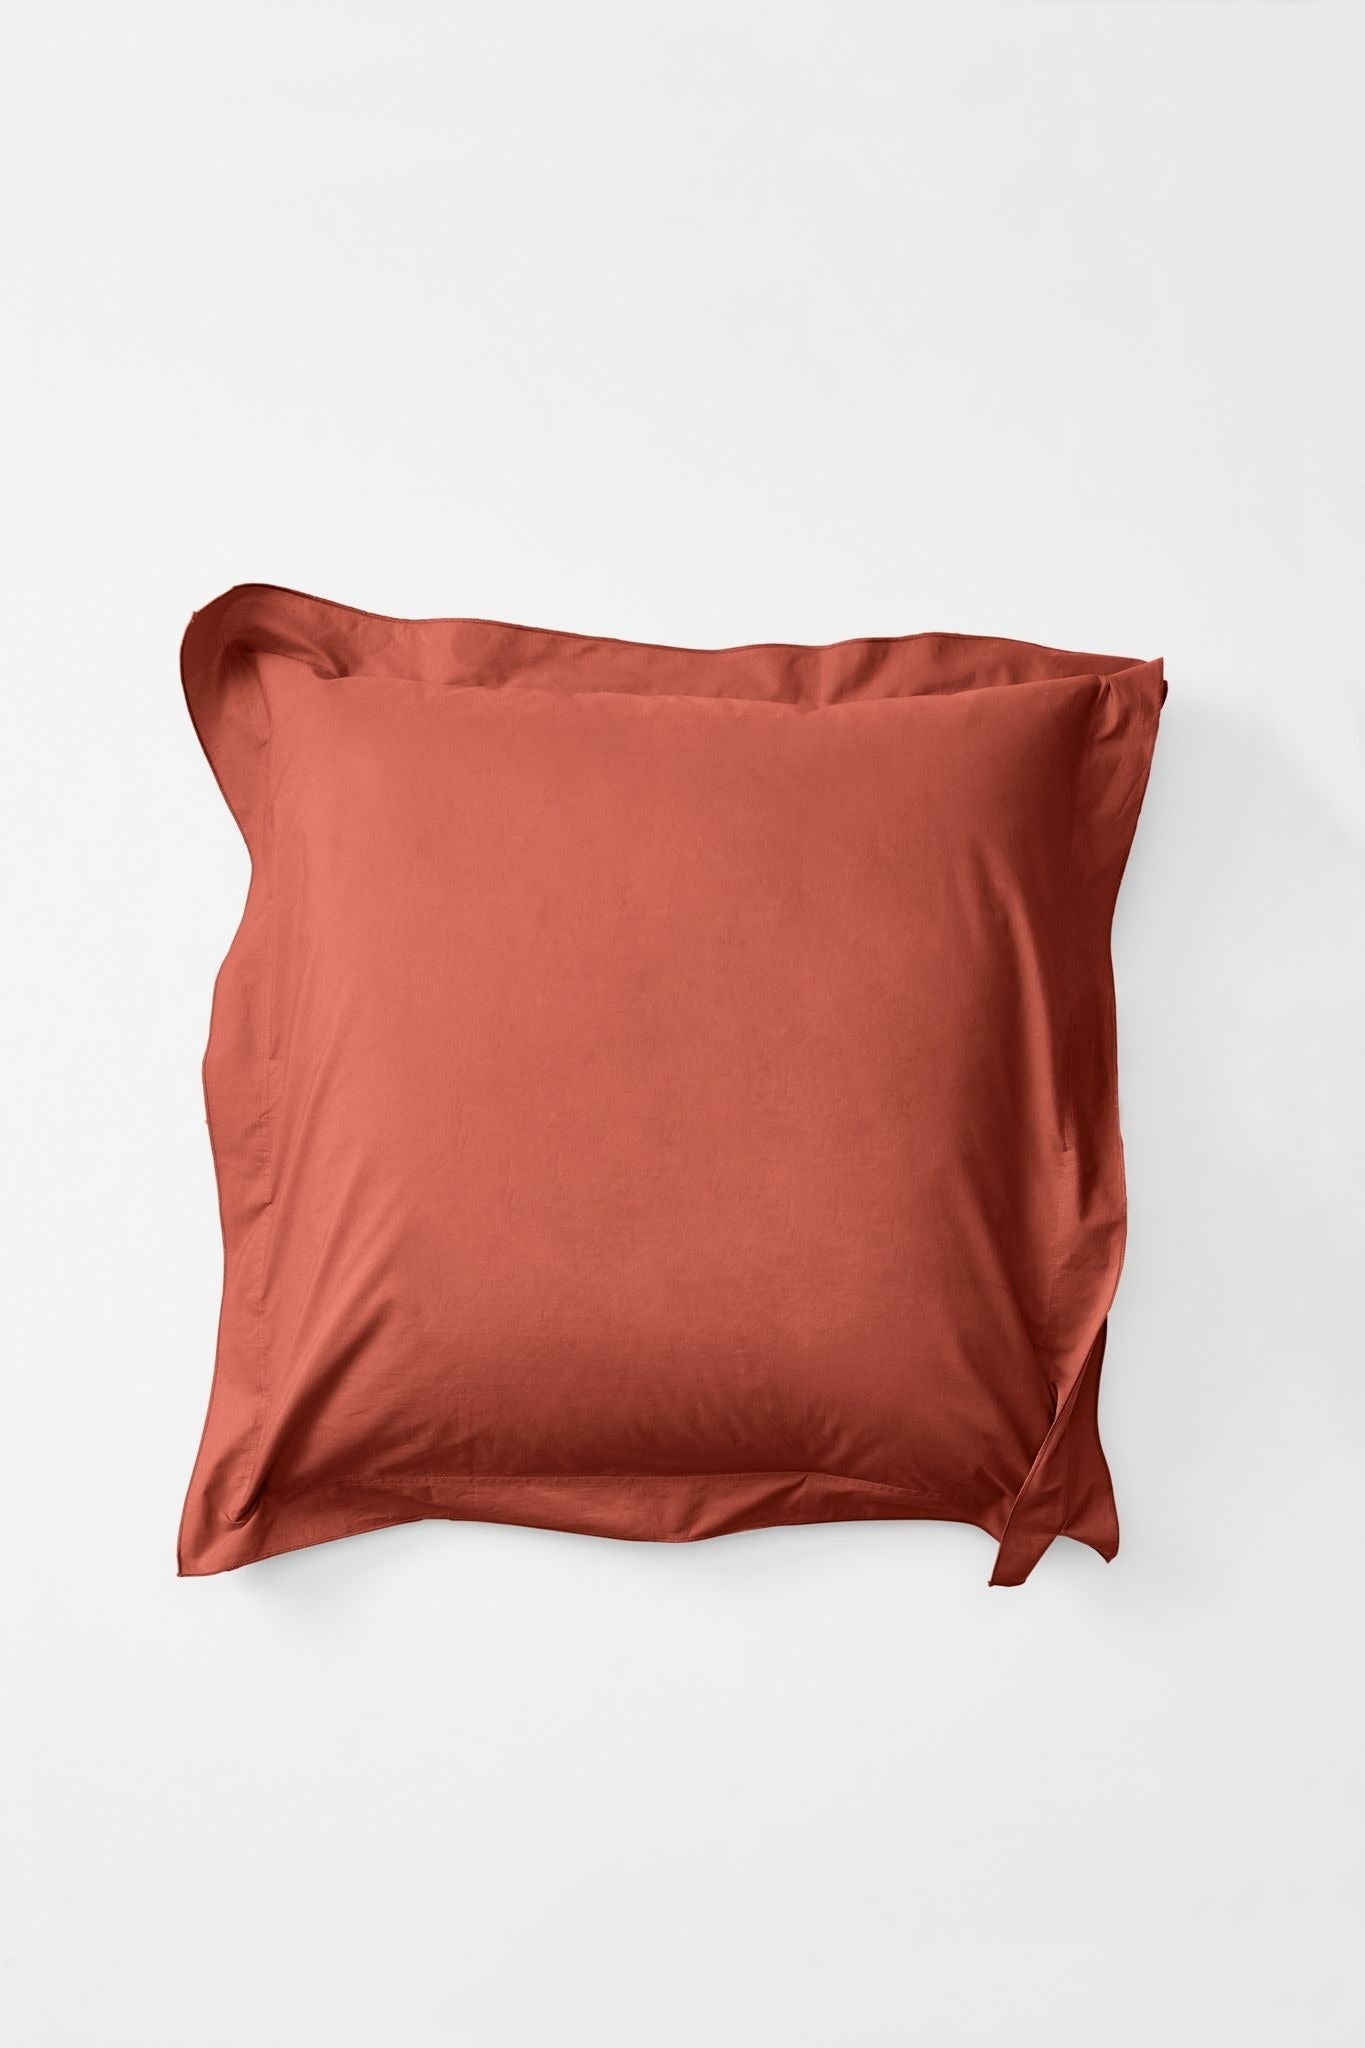 Mono Organic Cotton Percale Pillow Pair - Ochre Red Pillows in Euro Pillow